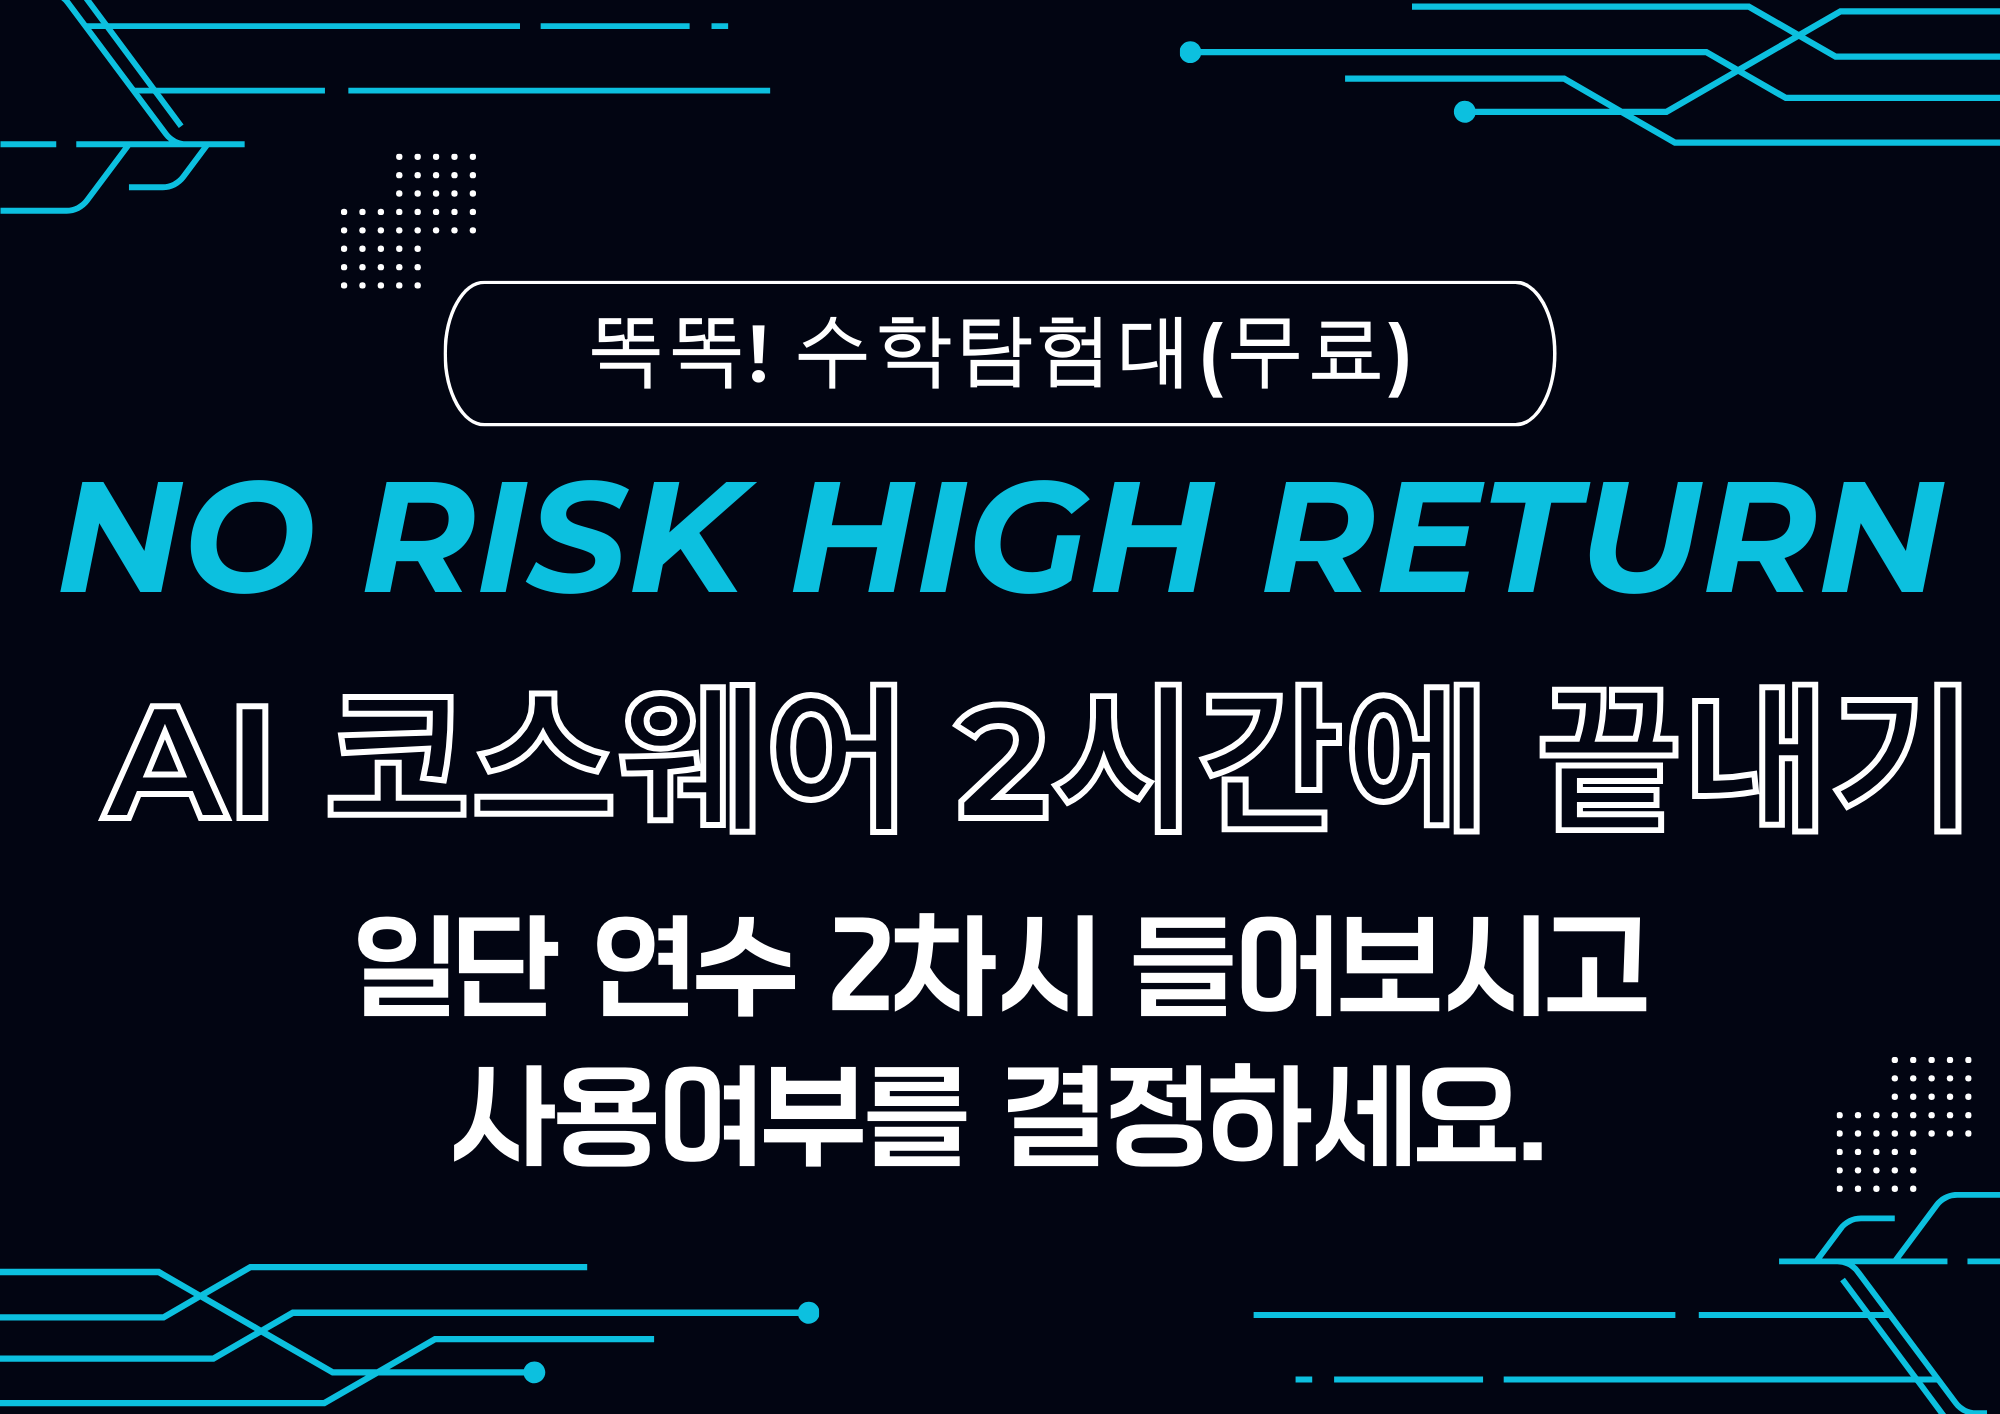 No Risk High Return, AI 코스웨어 2시간에 끝내기(1기)